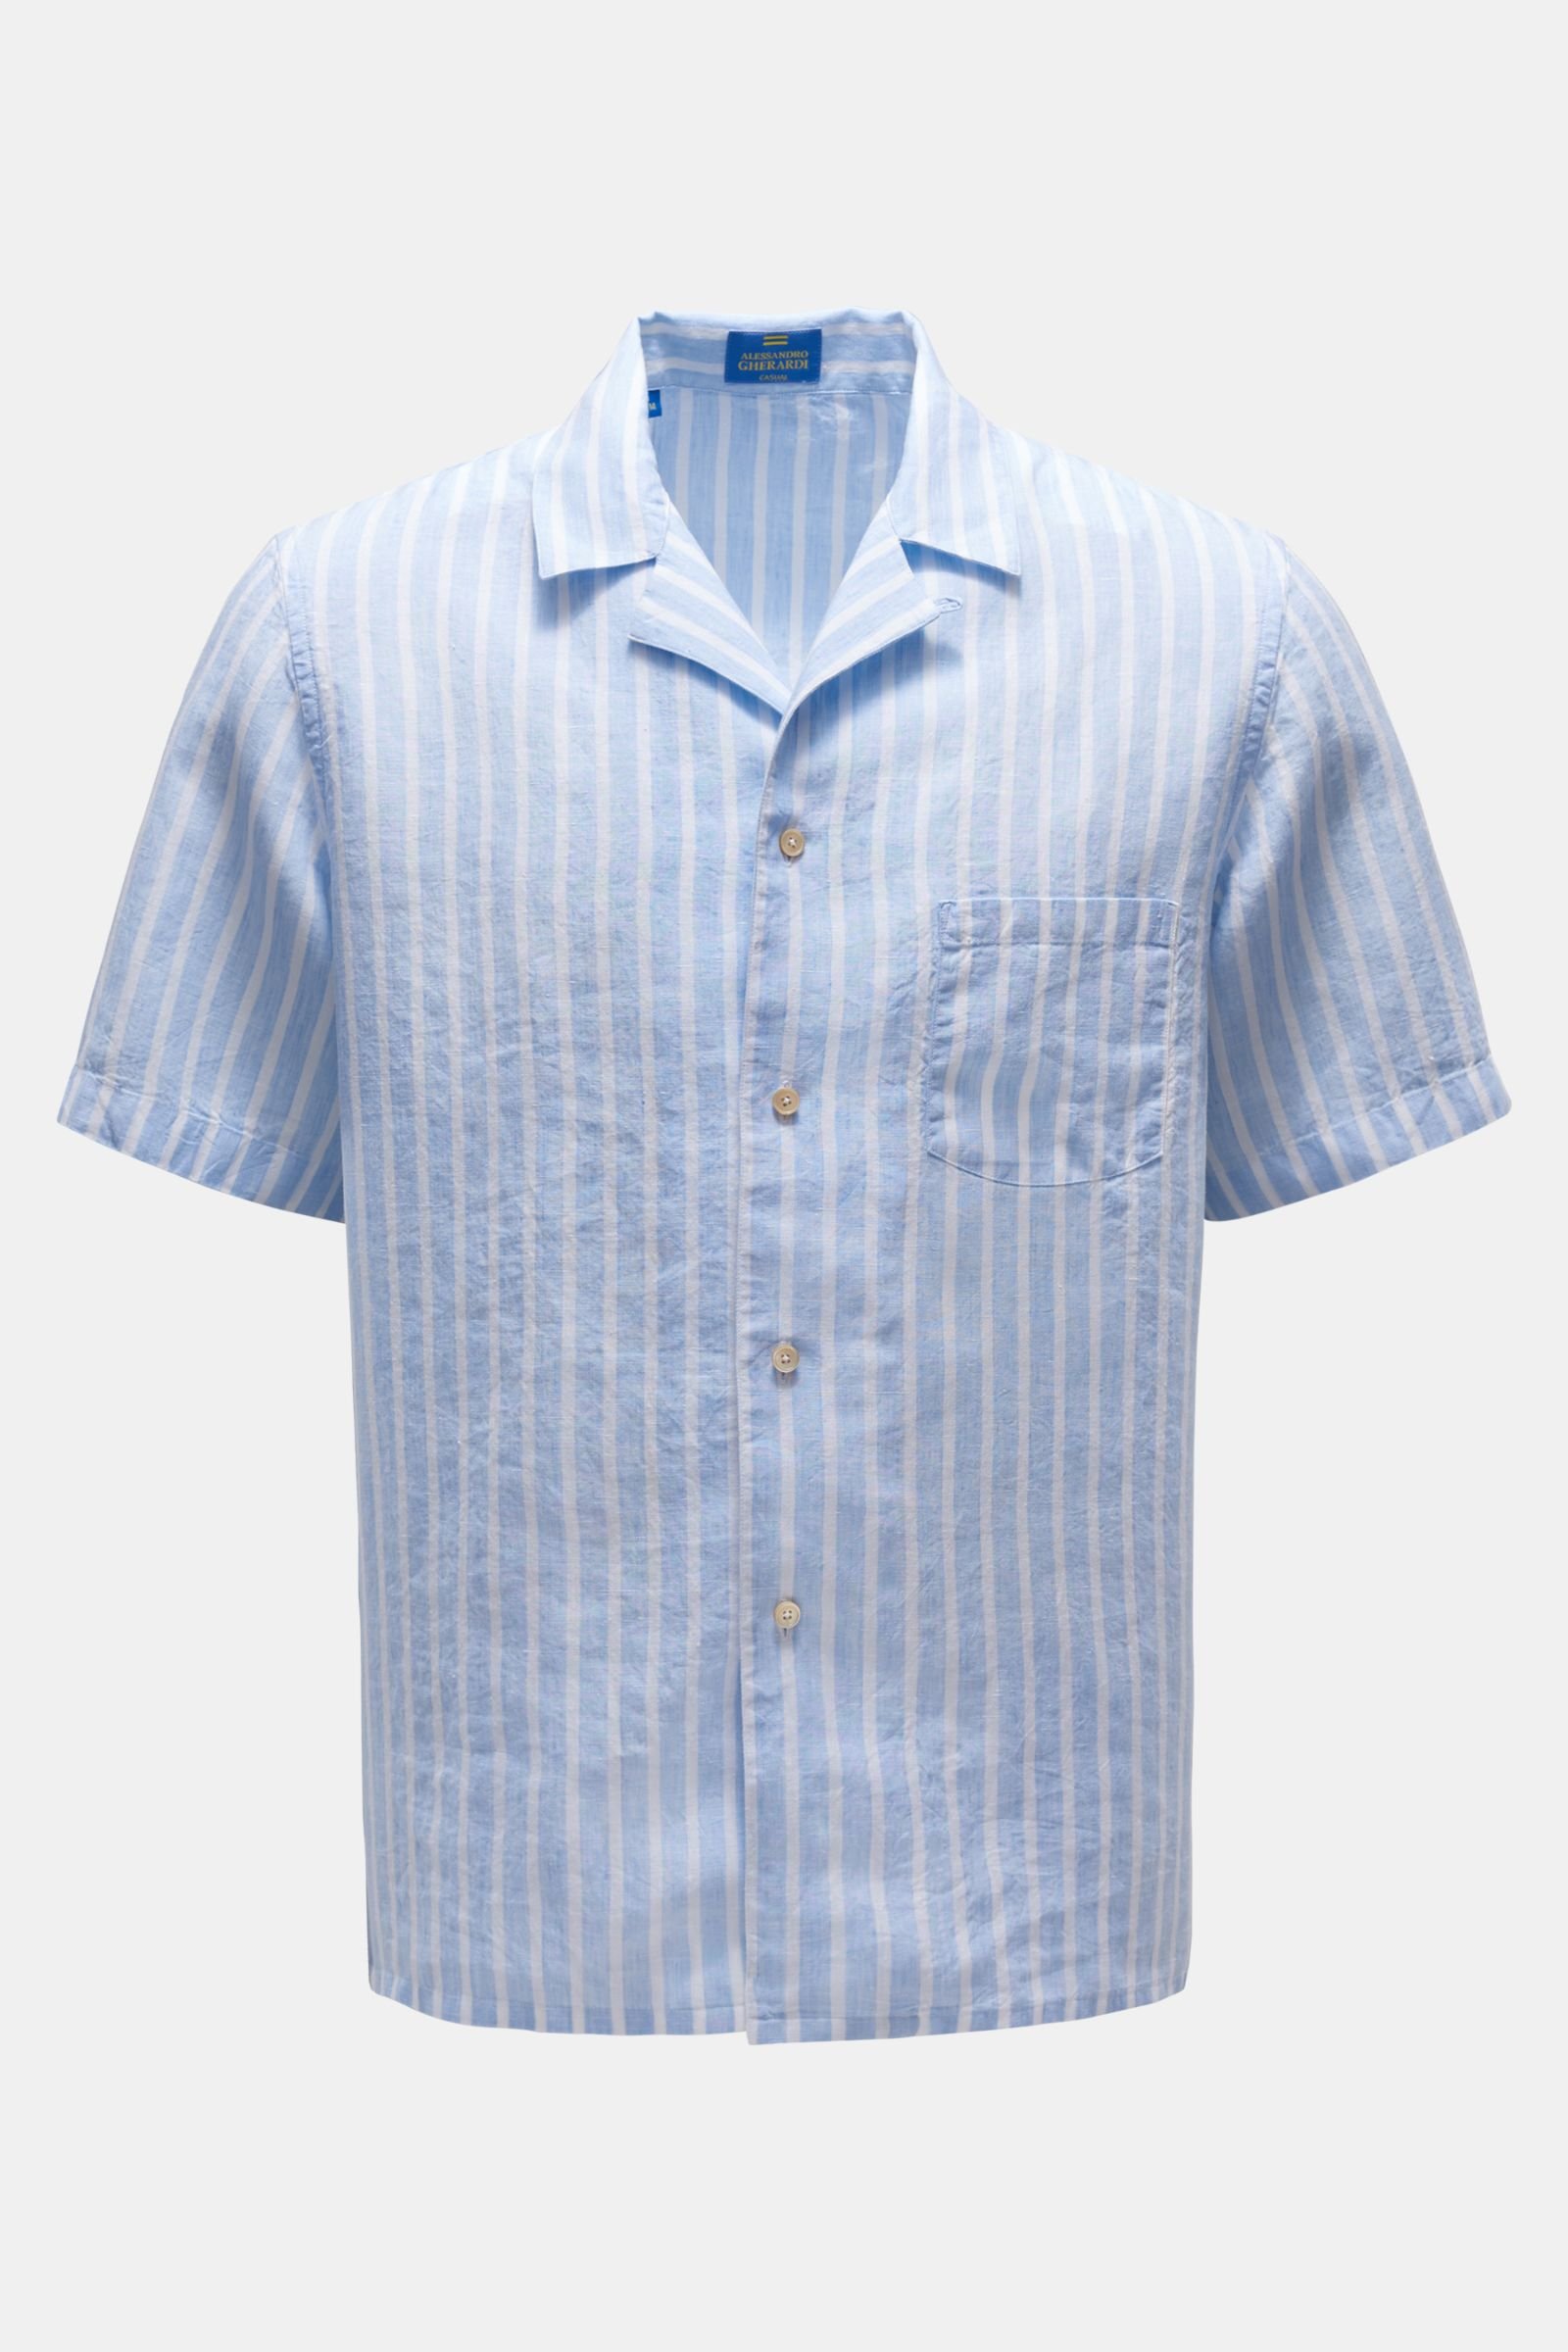 Linen short sleeve shirt 'Miami' Cuban collar light blue/white striped